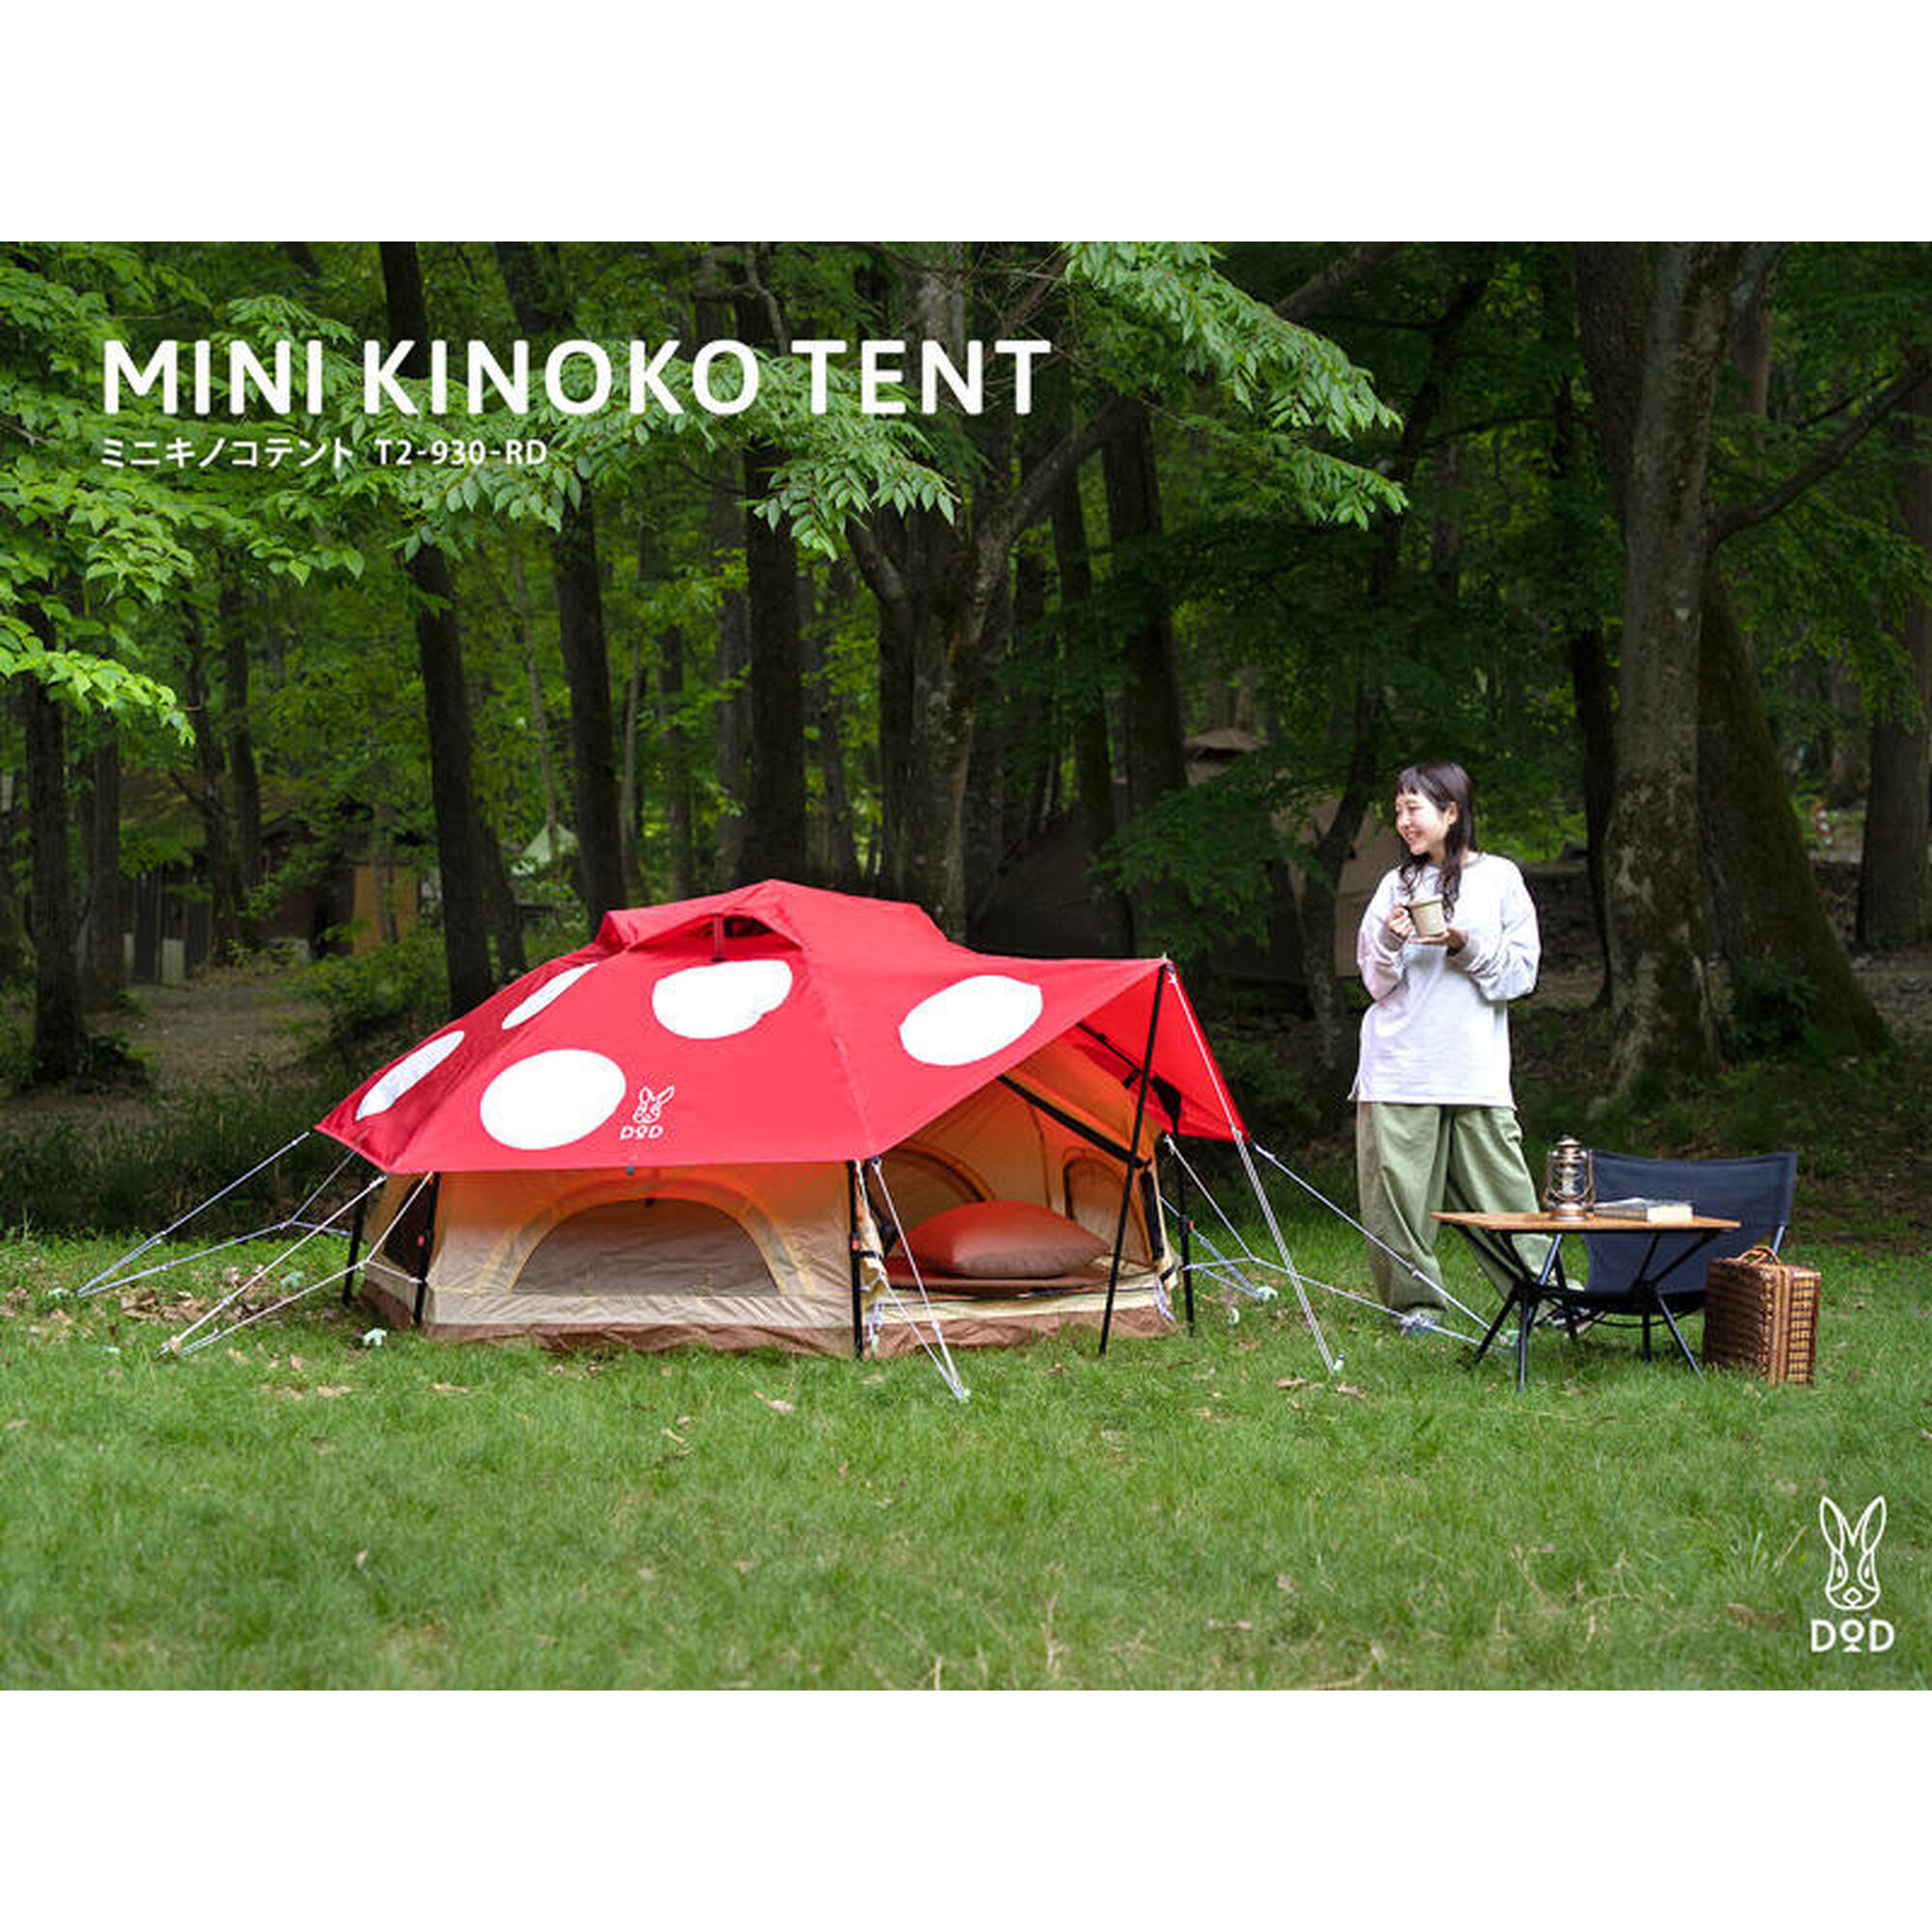 Mini kinoko tent T2-930-RD 蘑菇2人露營帳篷 - 紅色